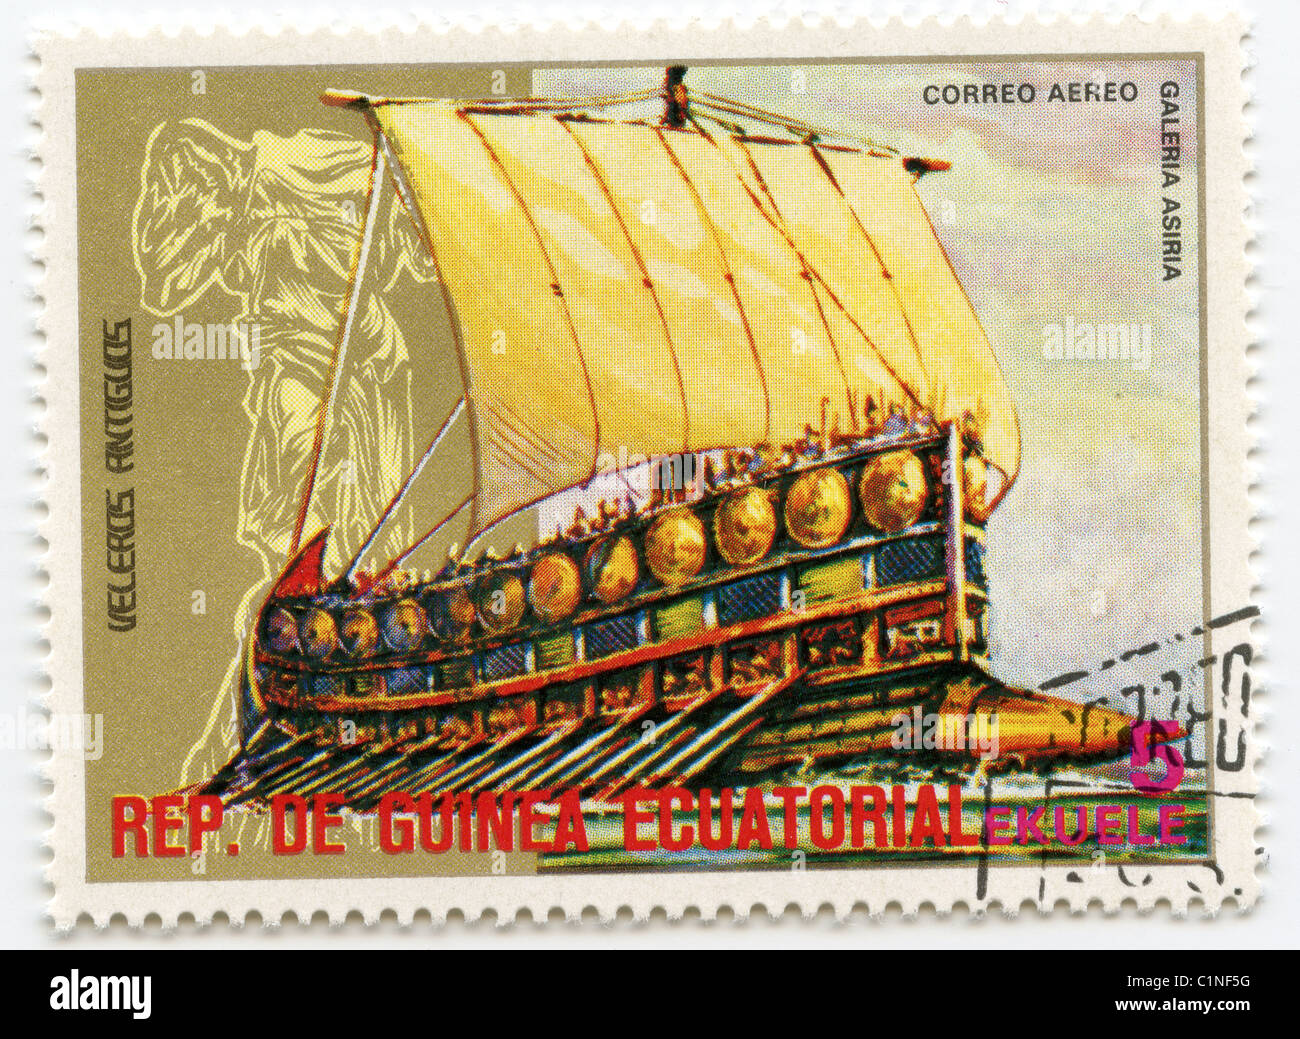 Republic de Guinea Ecuatorial postage stamp Stock Photo